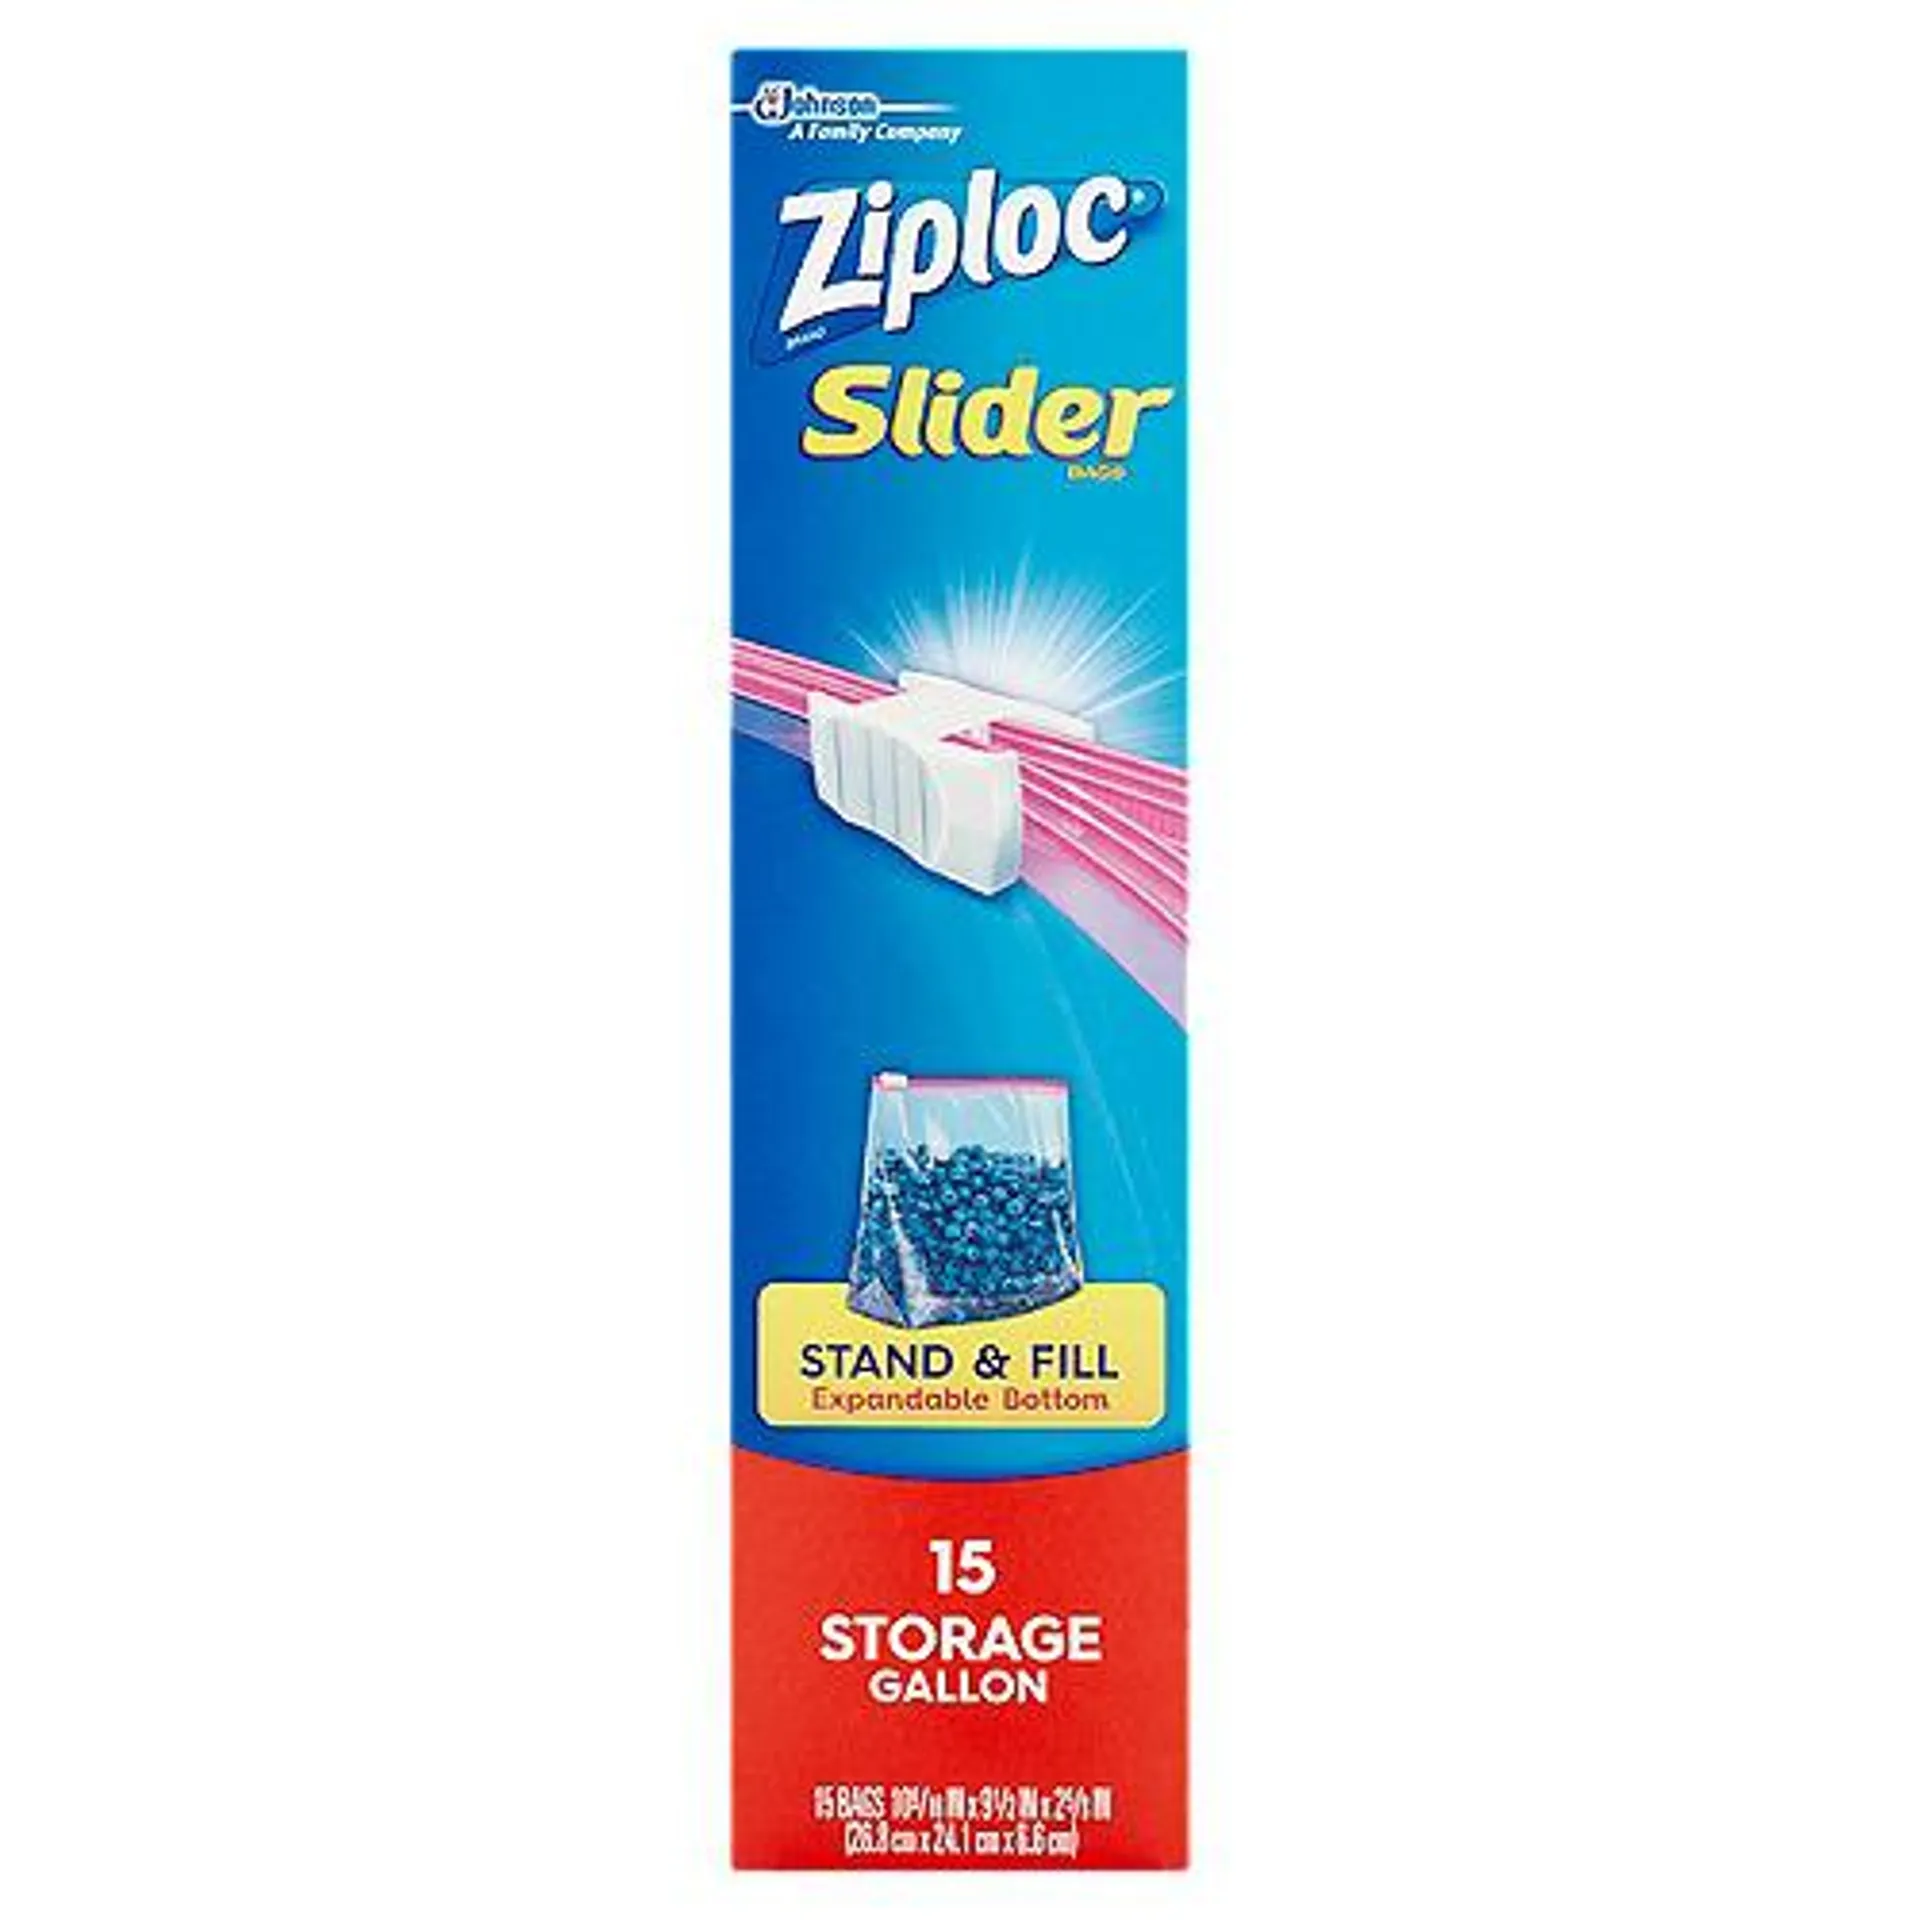 Ziploc Storage Gallon, Slider Bags, 15 Each